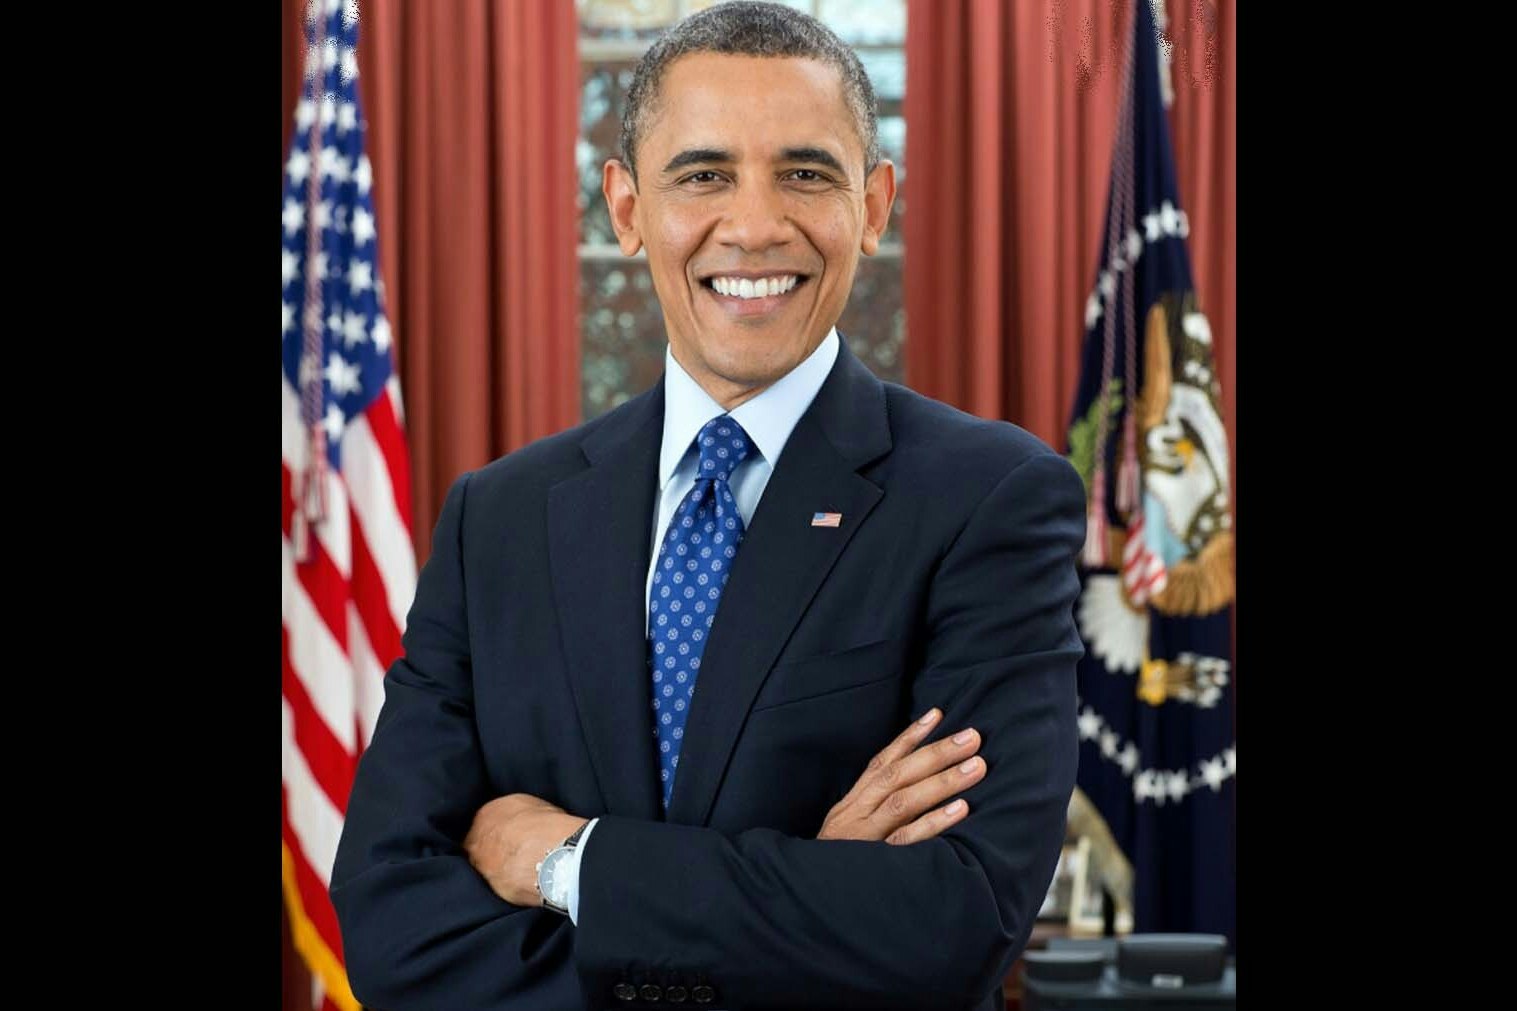 Obama photo